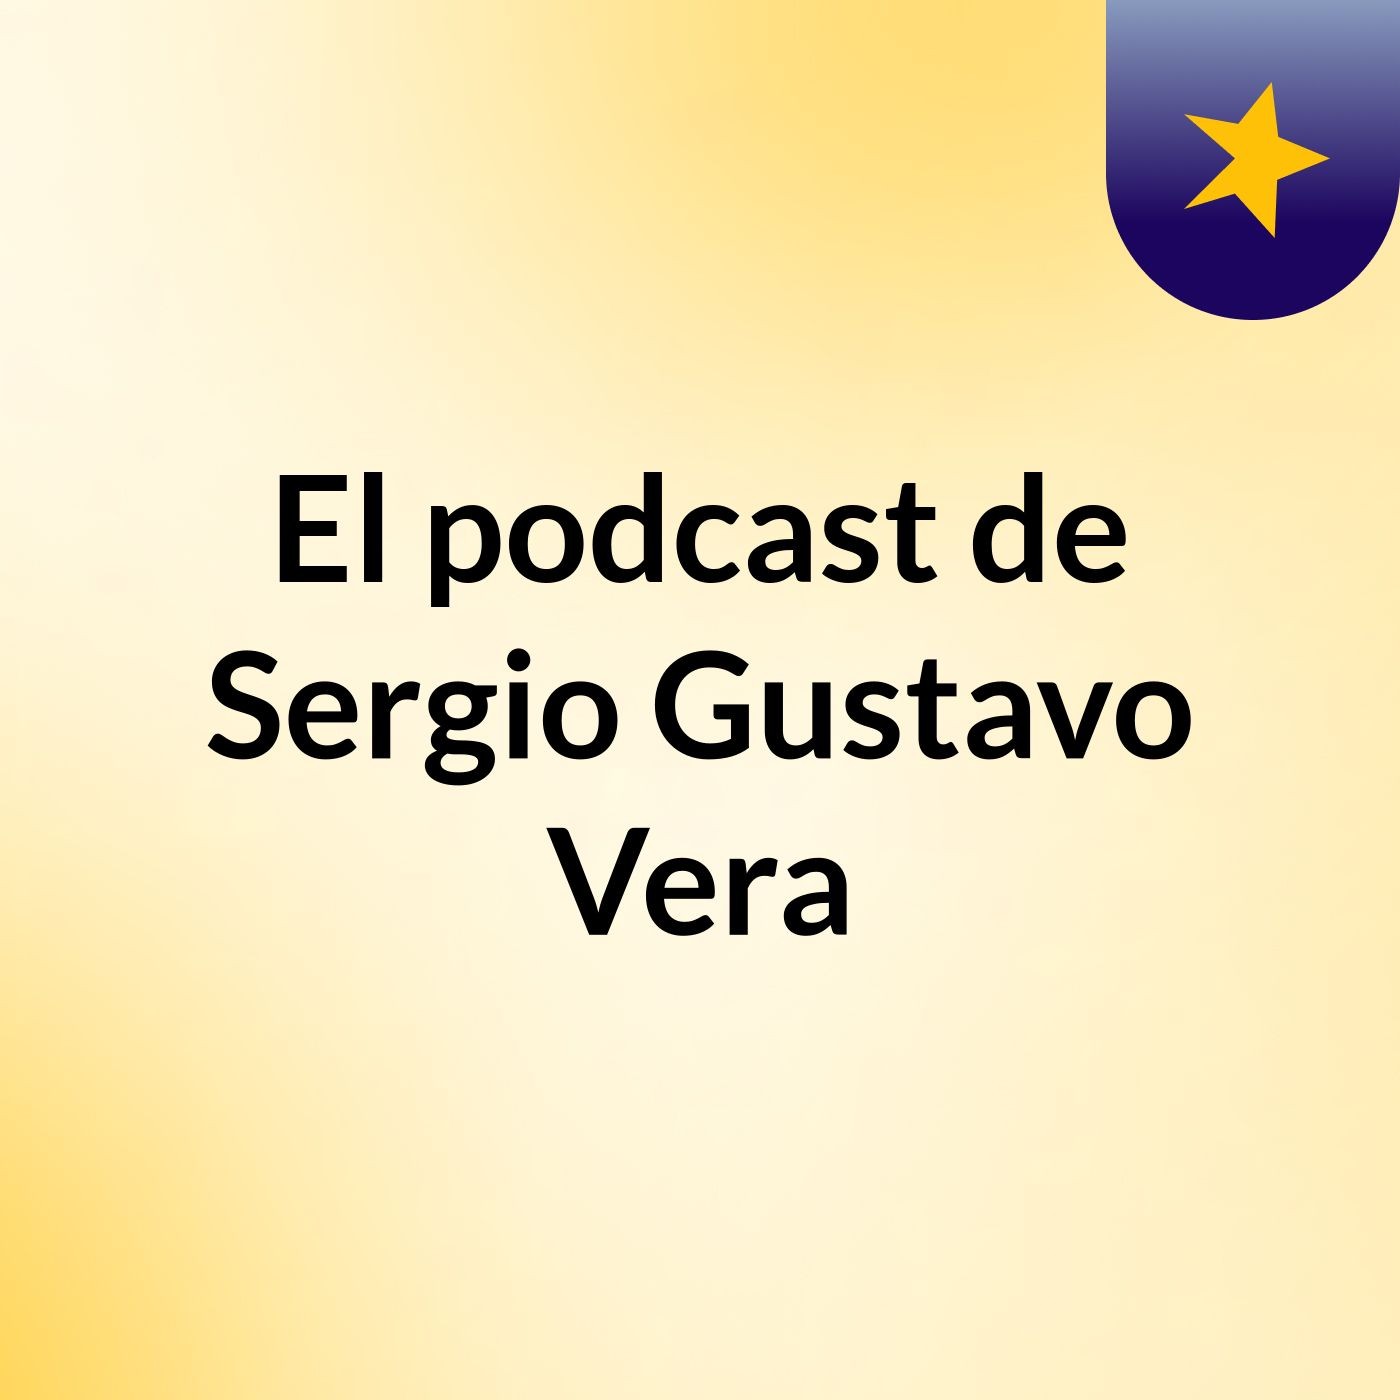 Episodio 5 - El podcast de Sergio Gustavo Vera